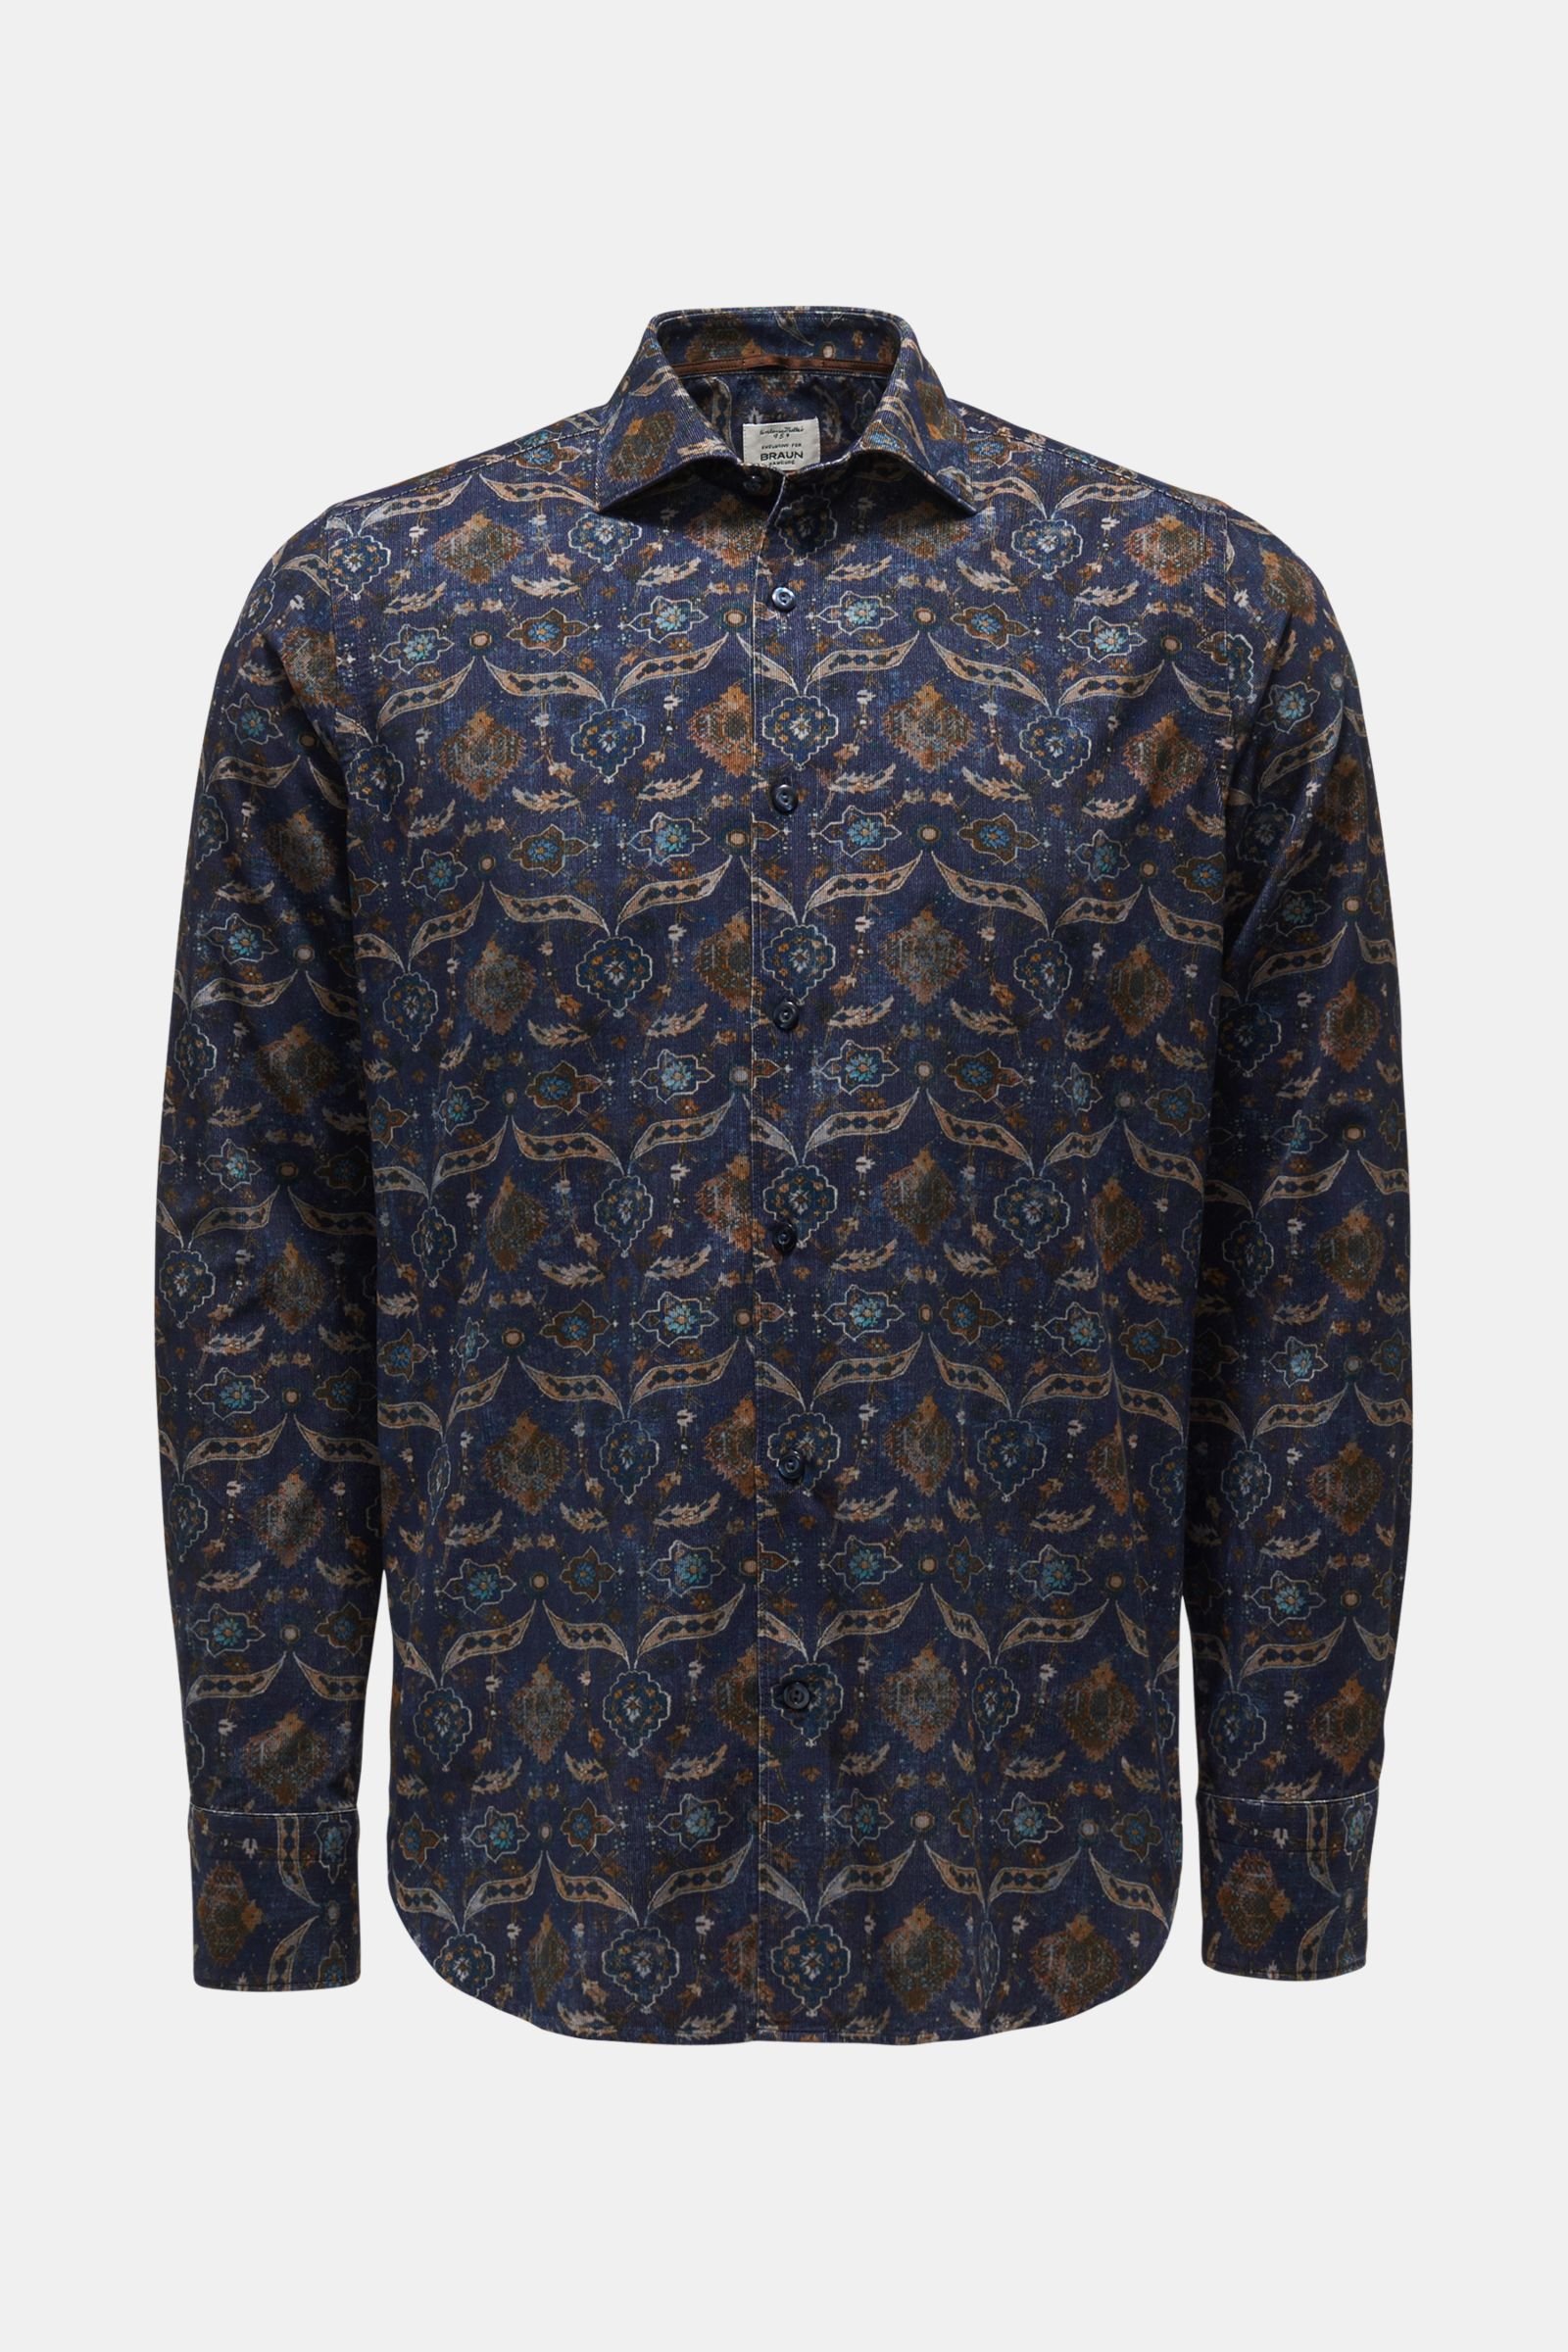 Corduroy shirt shark collar navy/brown patterned